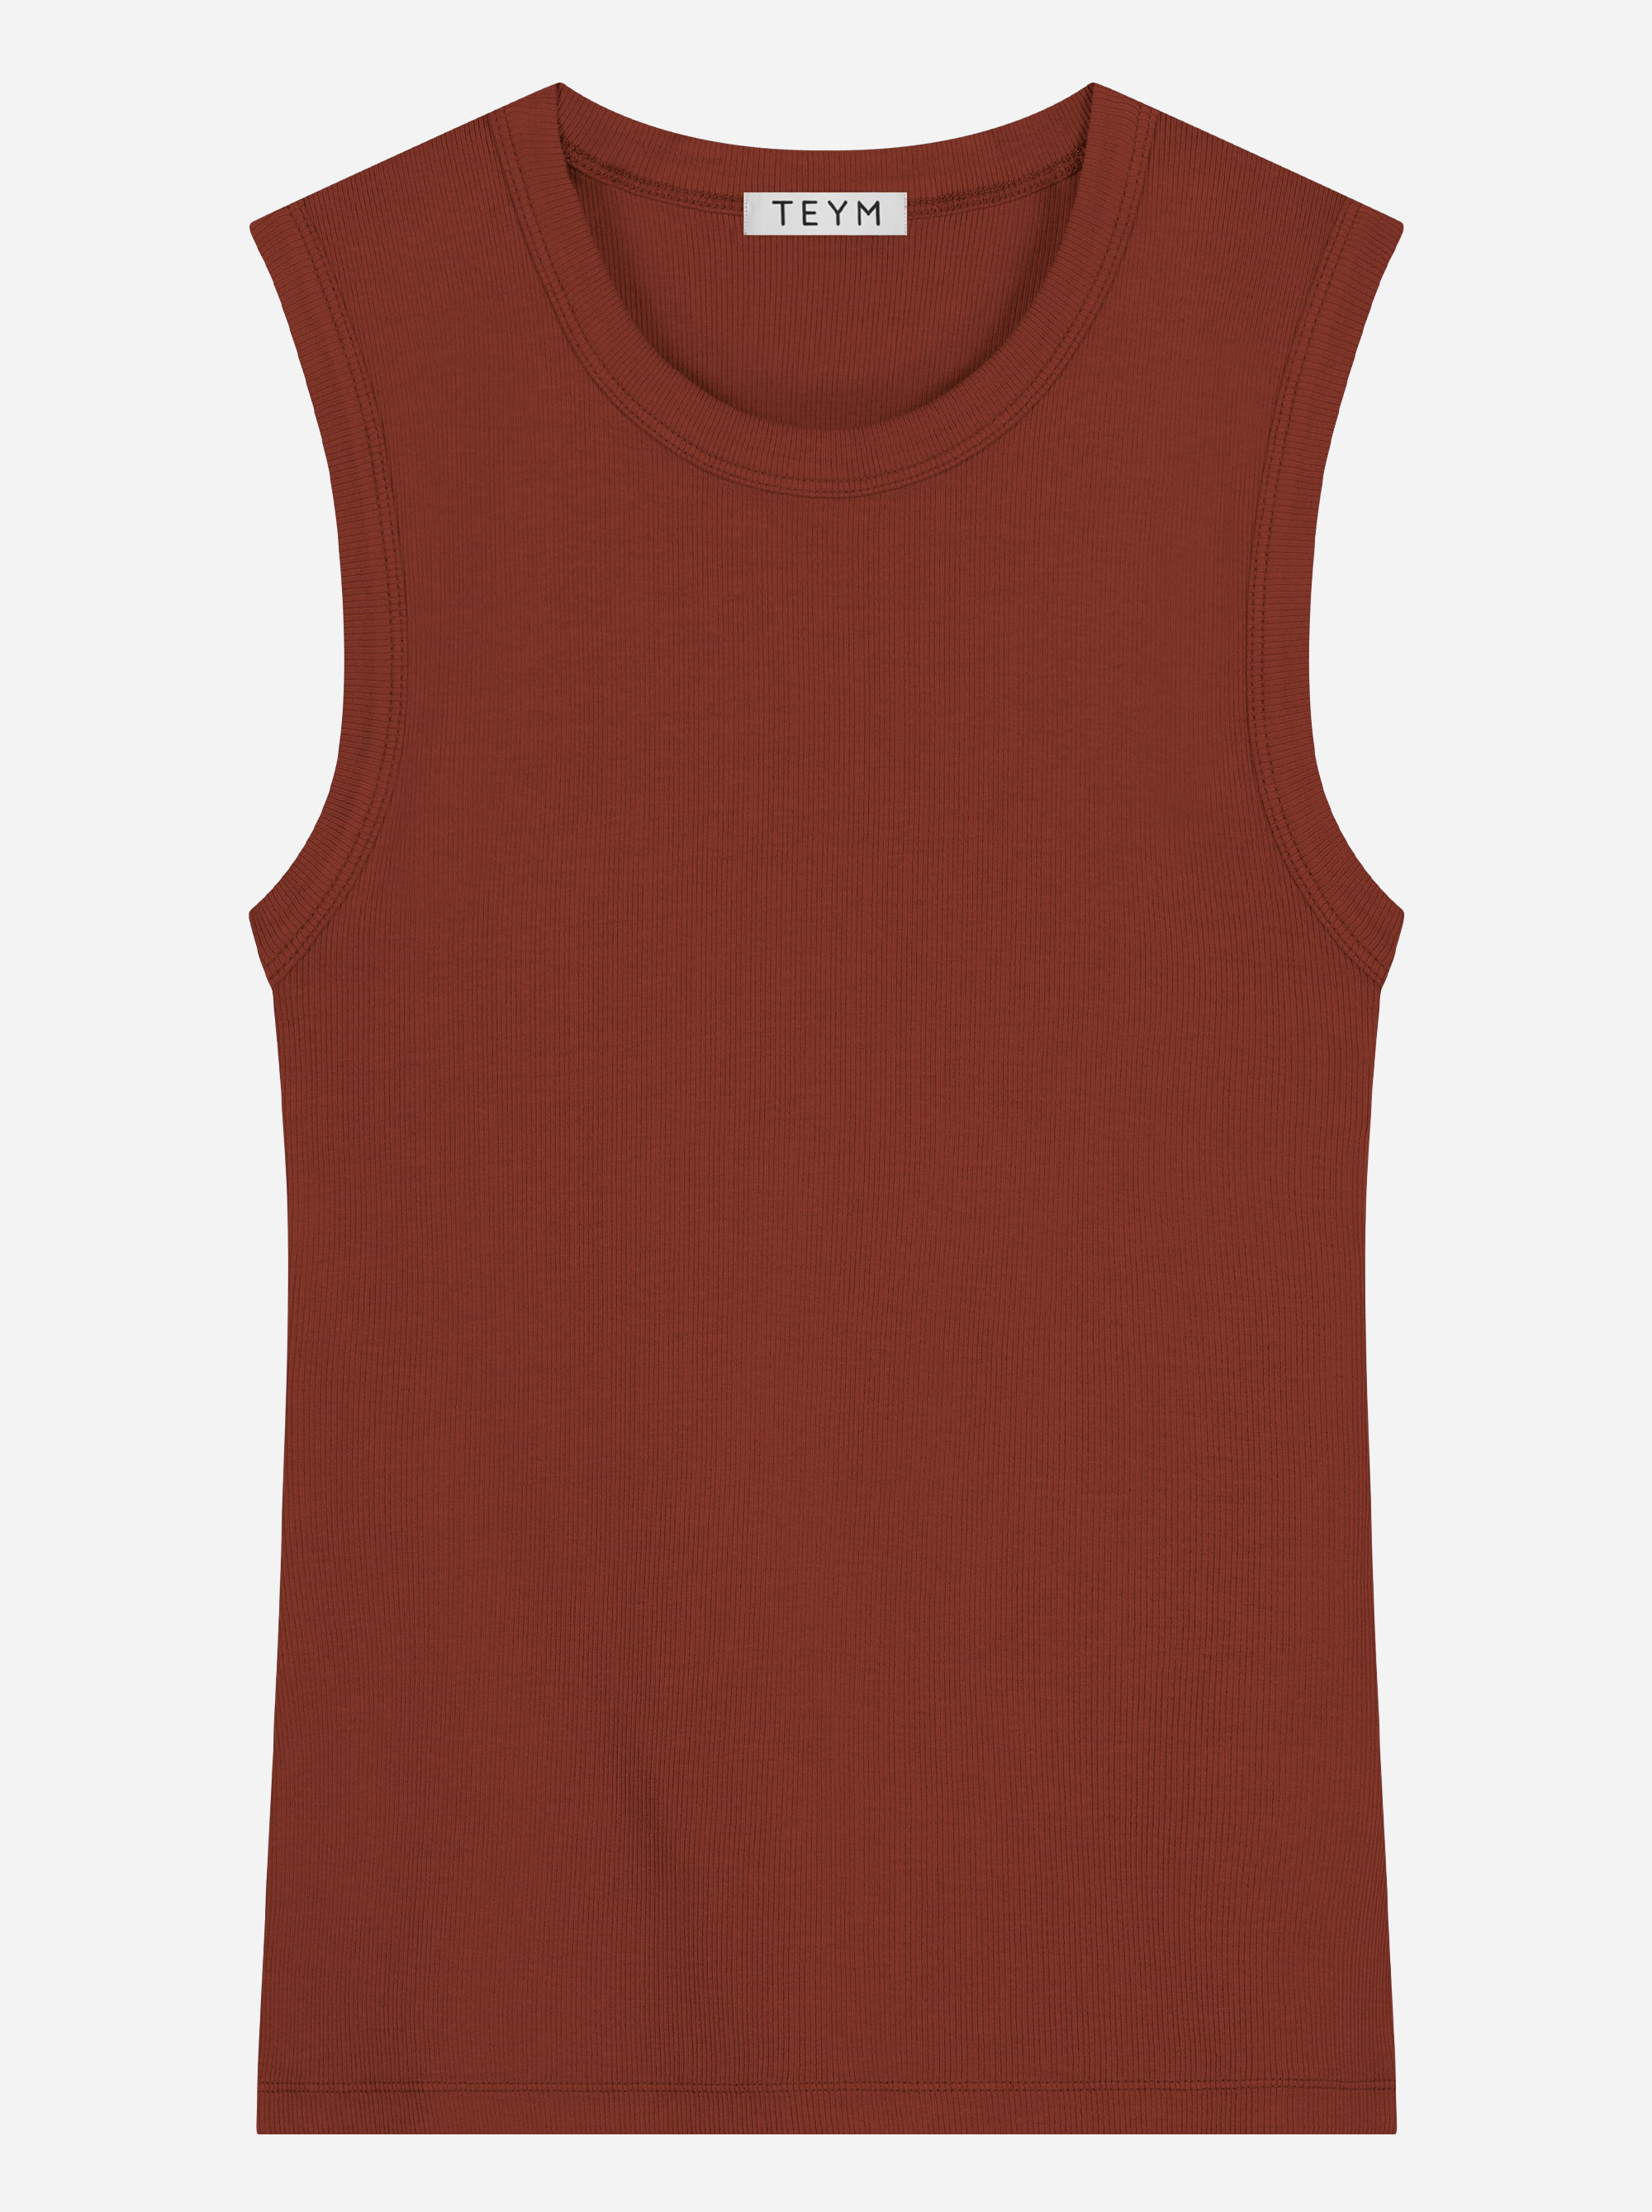 Teym - The Sleeveless T-Shirt - Women - Brandy Brown